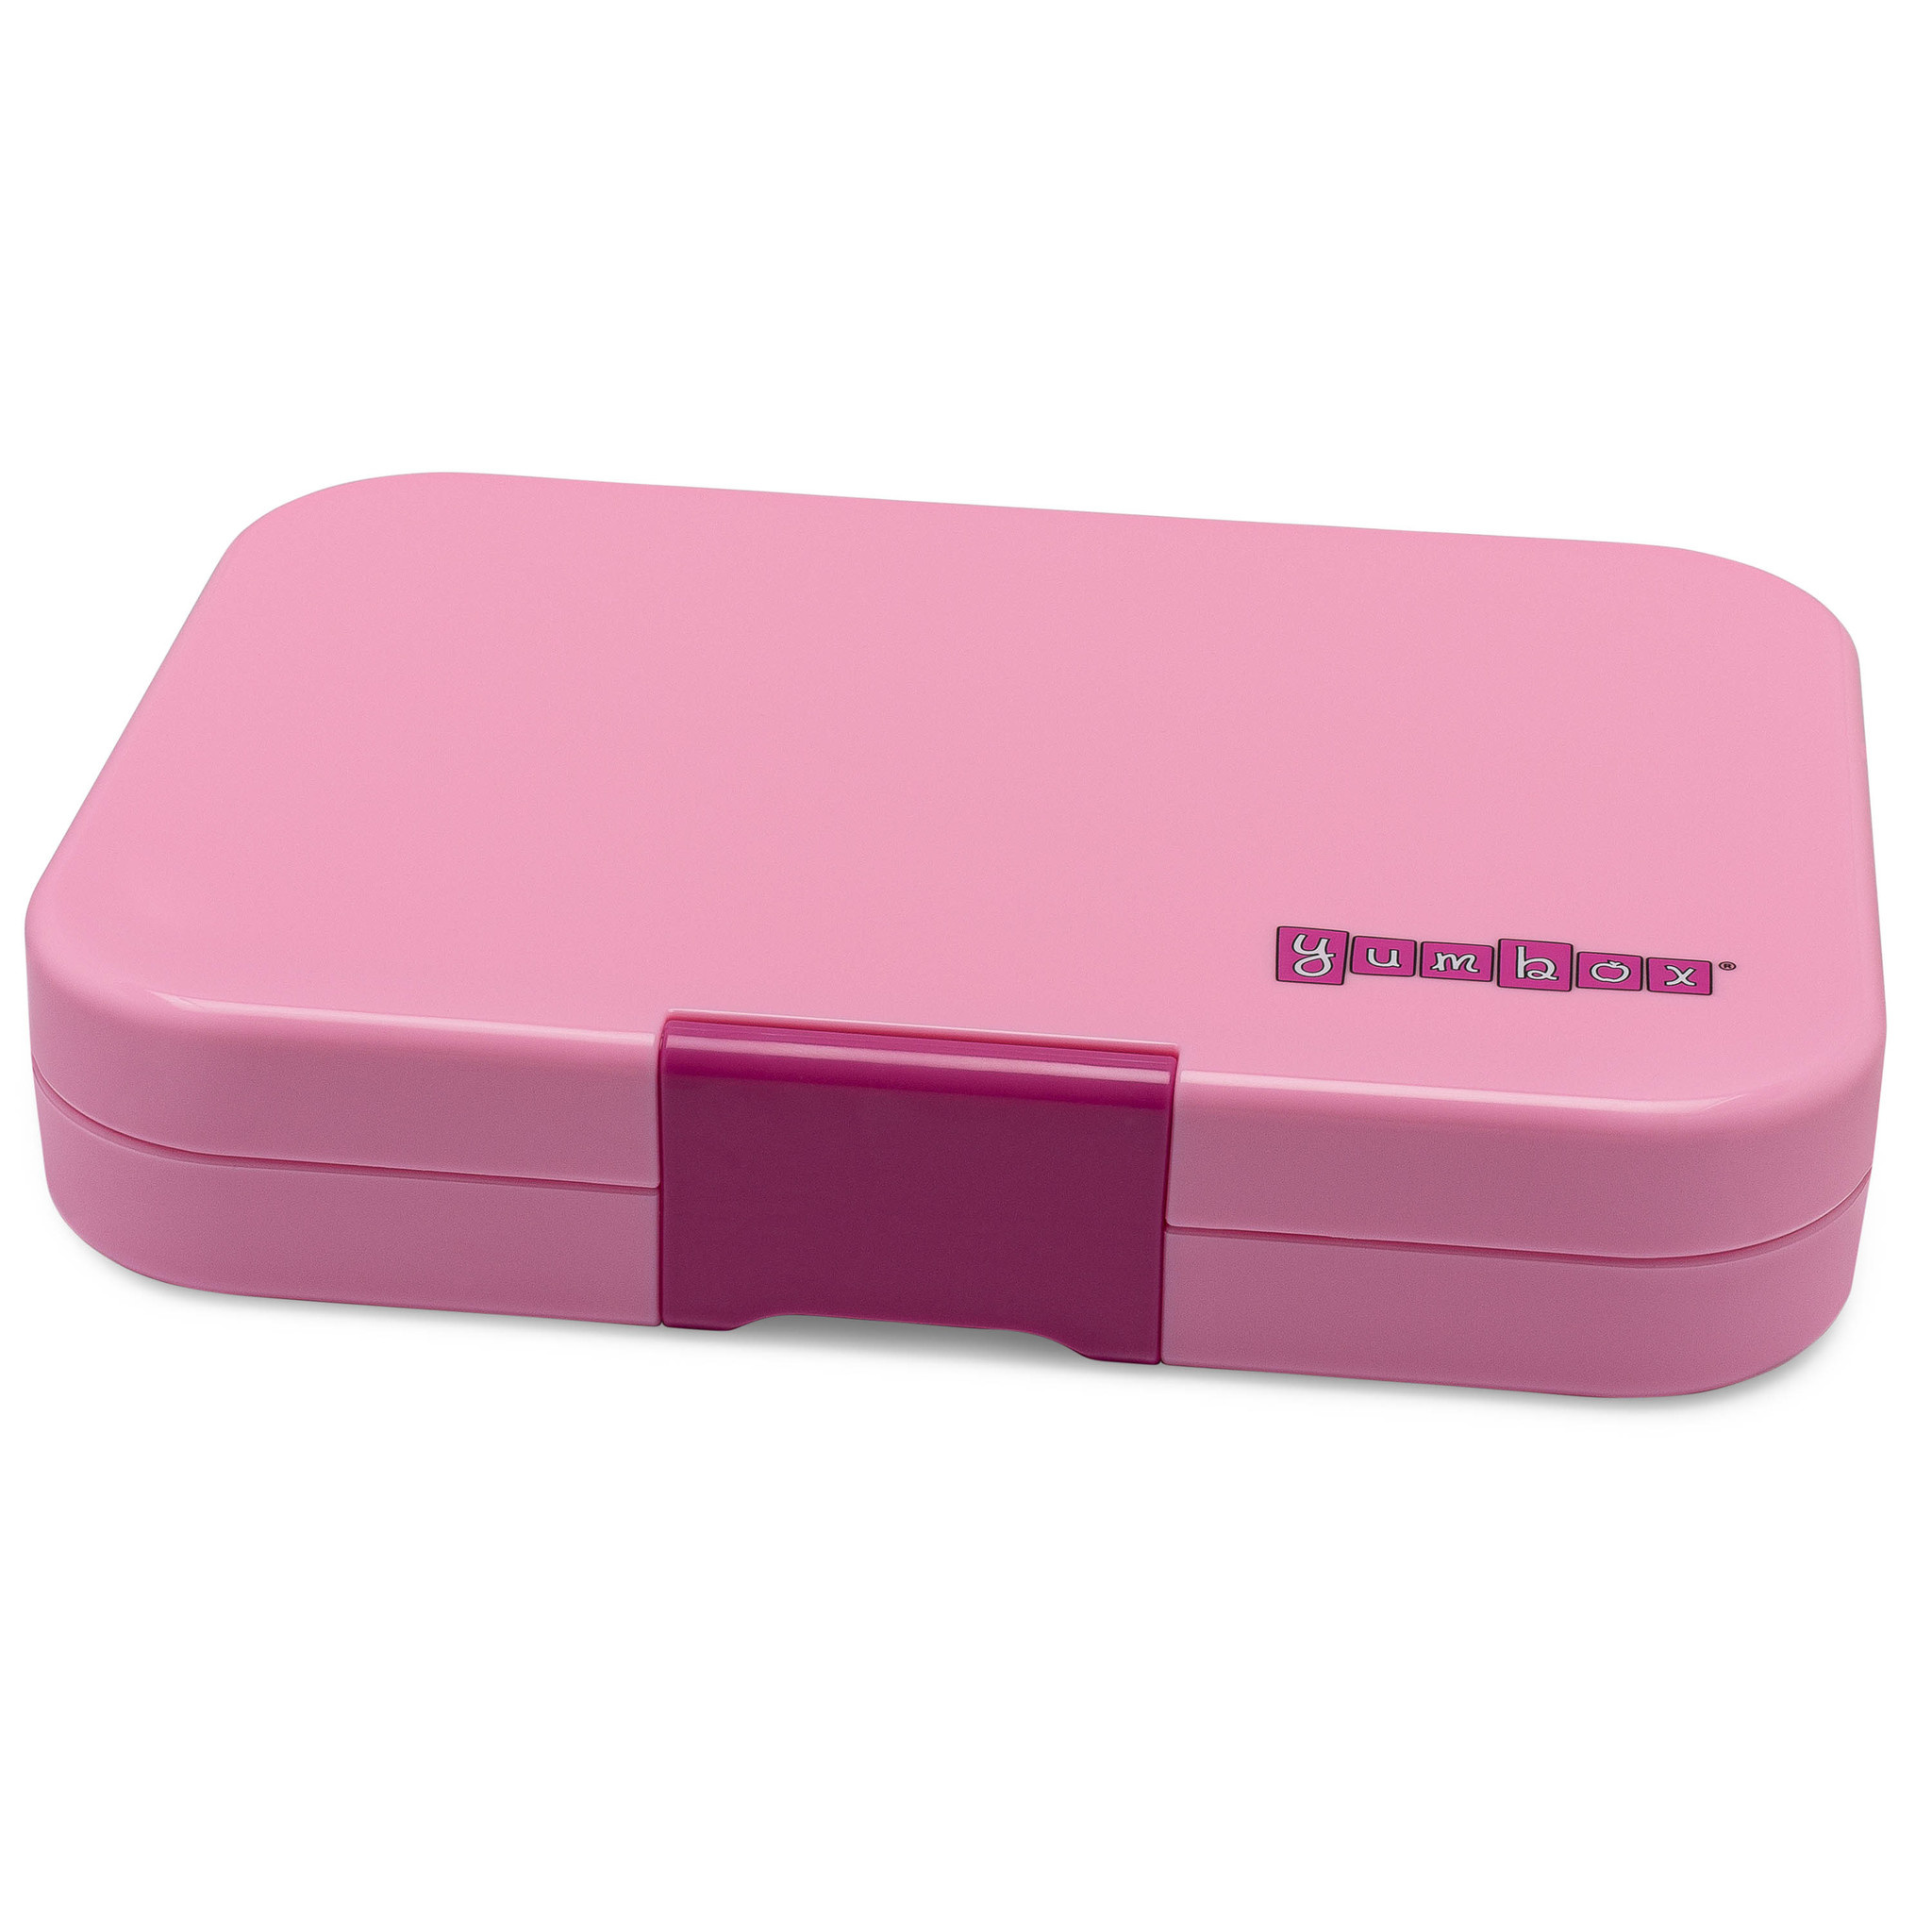 Yumbox Tapas XL exterior box Capri pink-1